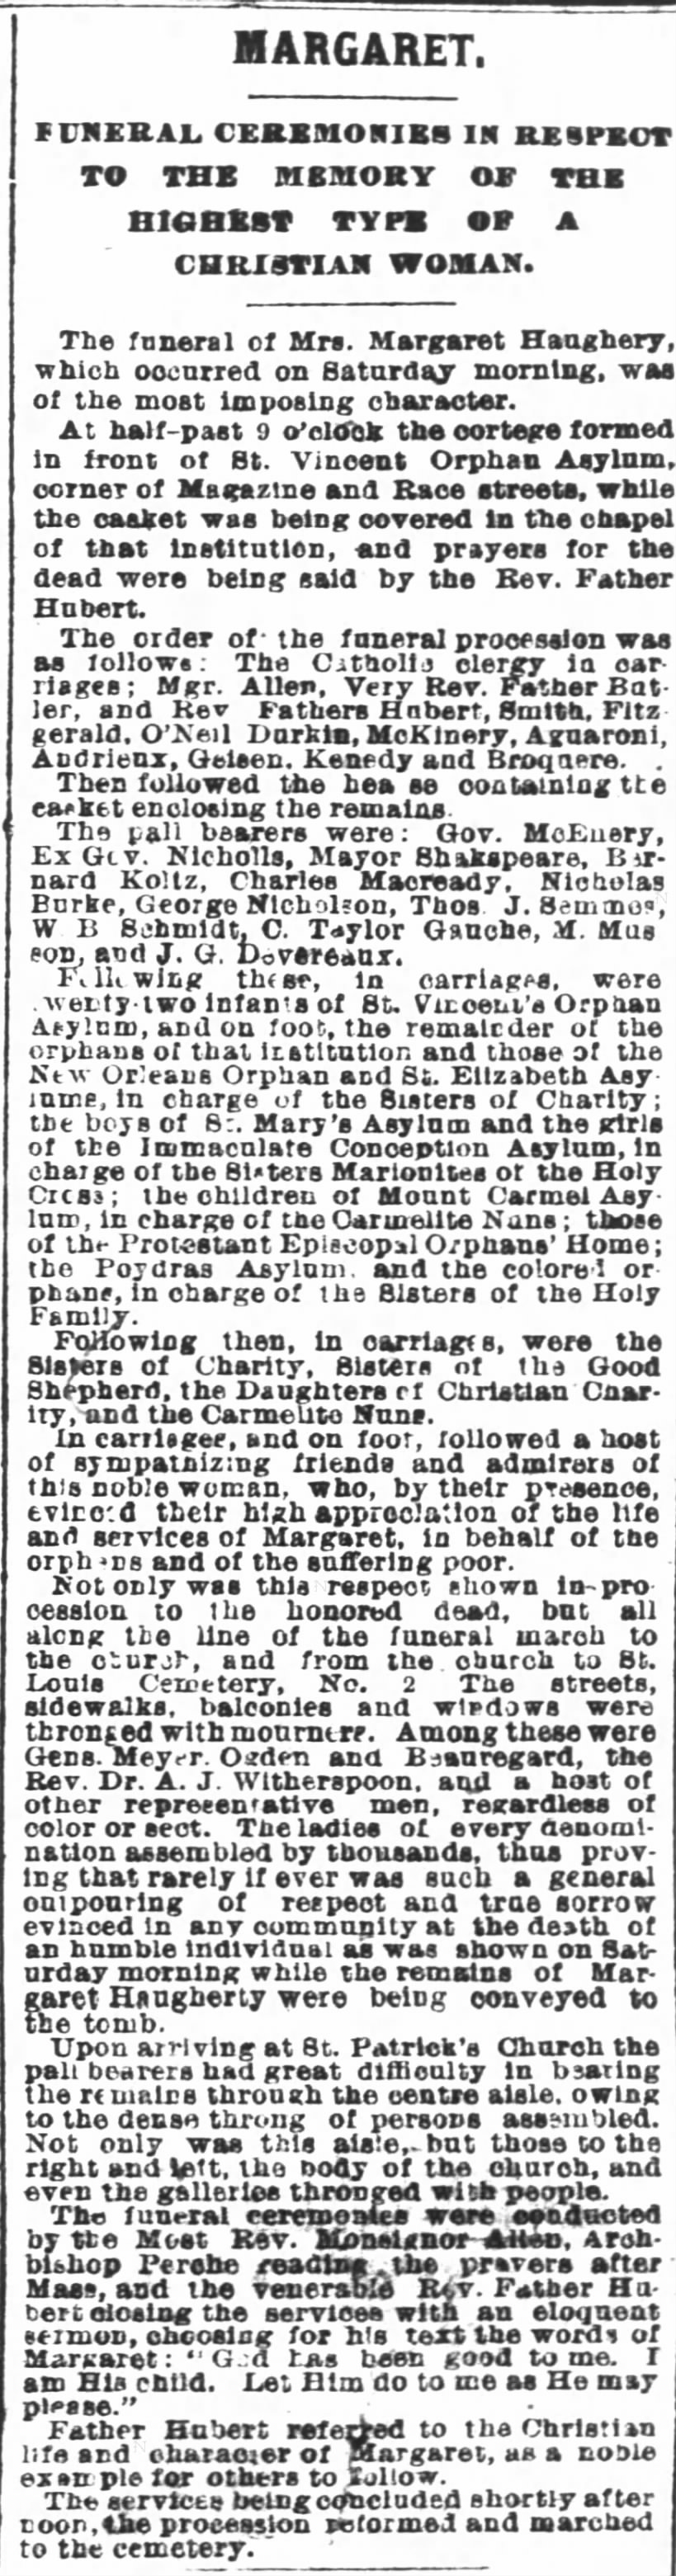 Margaret Funeral
Feb. 11, 1882 TP, p. 1